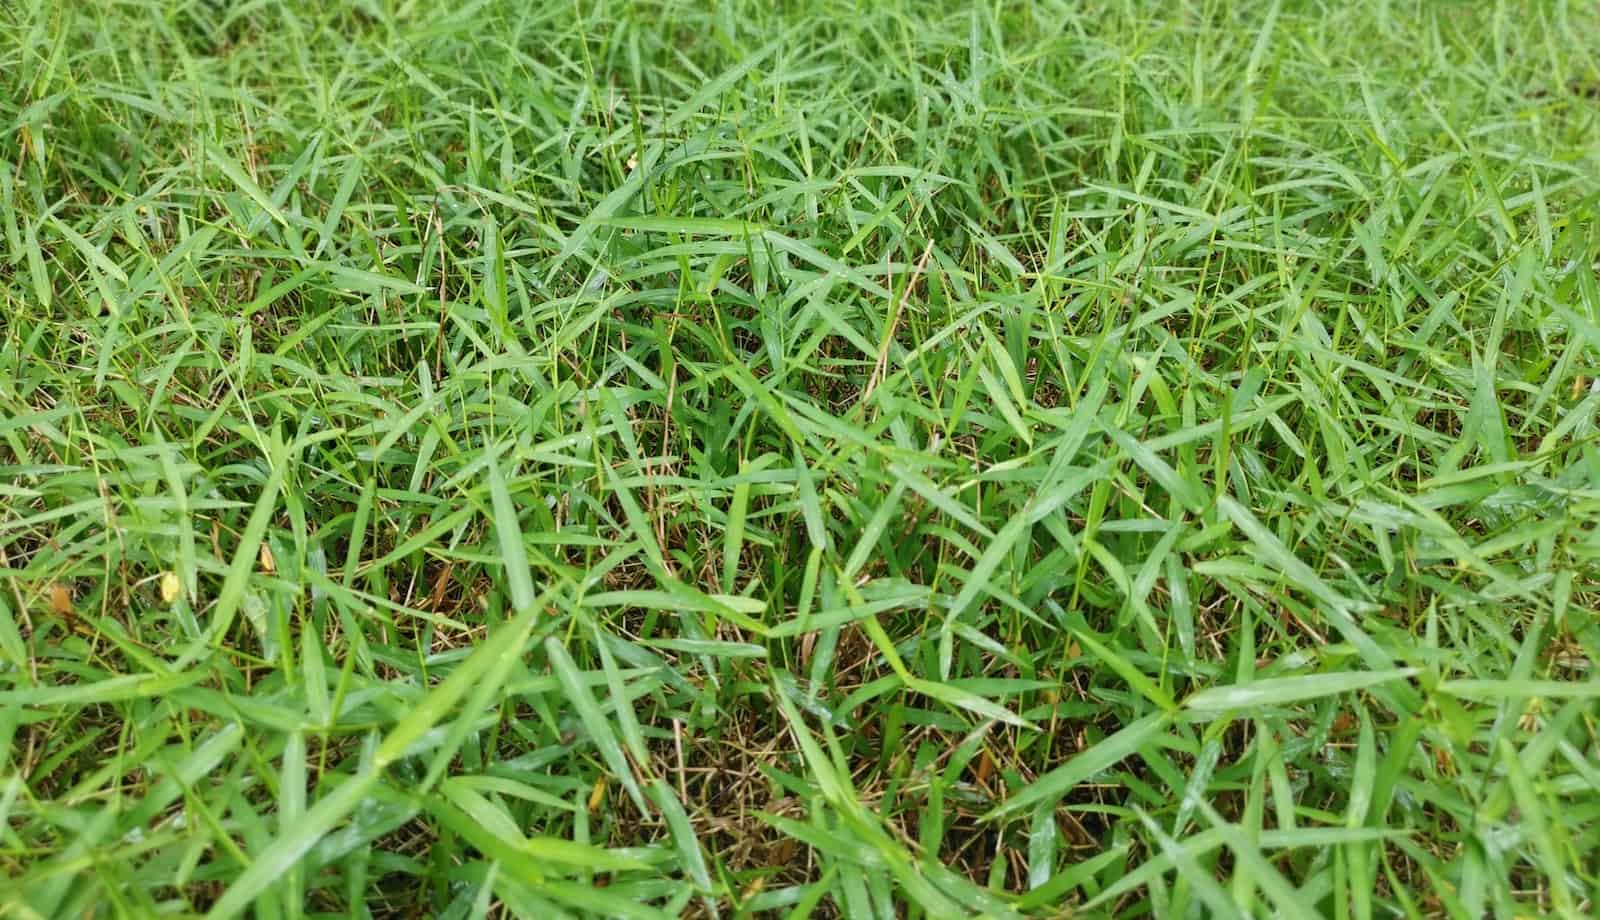 Overgrown bermuda grass